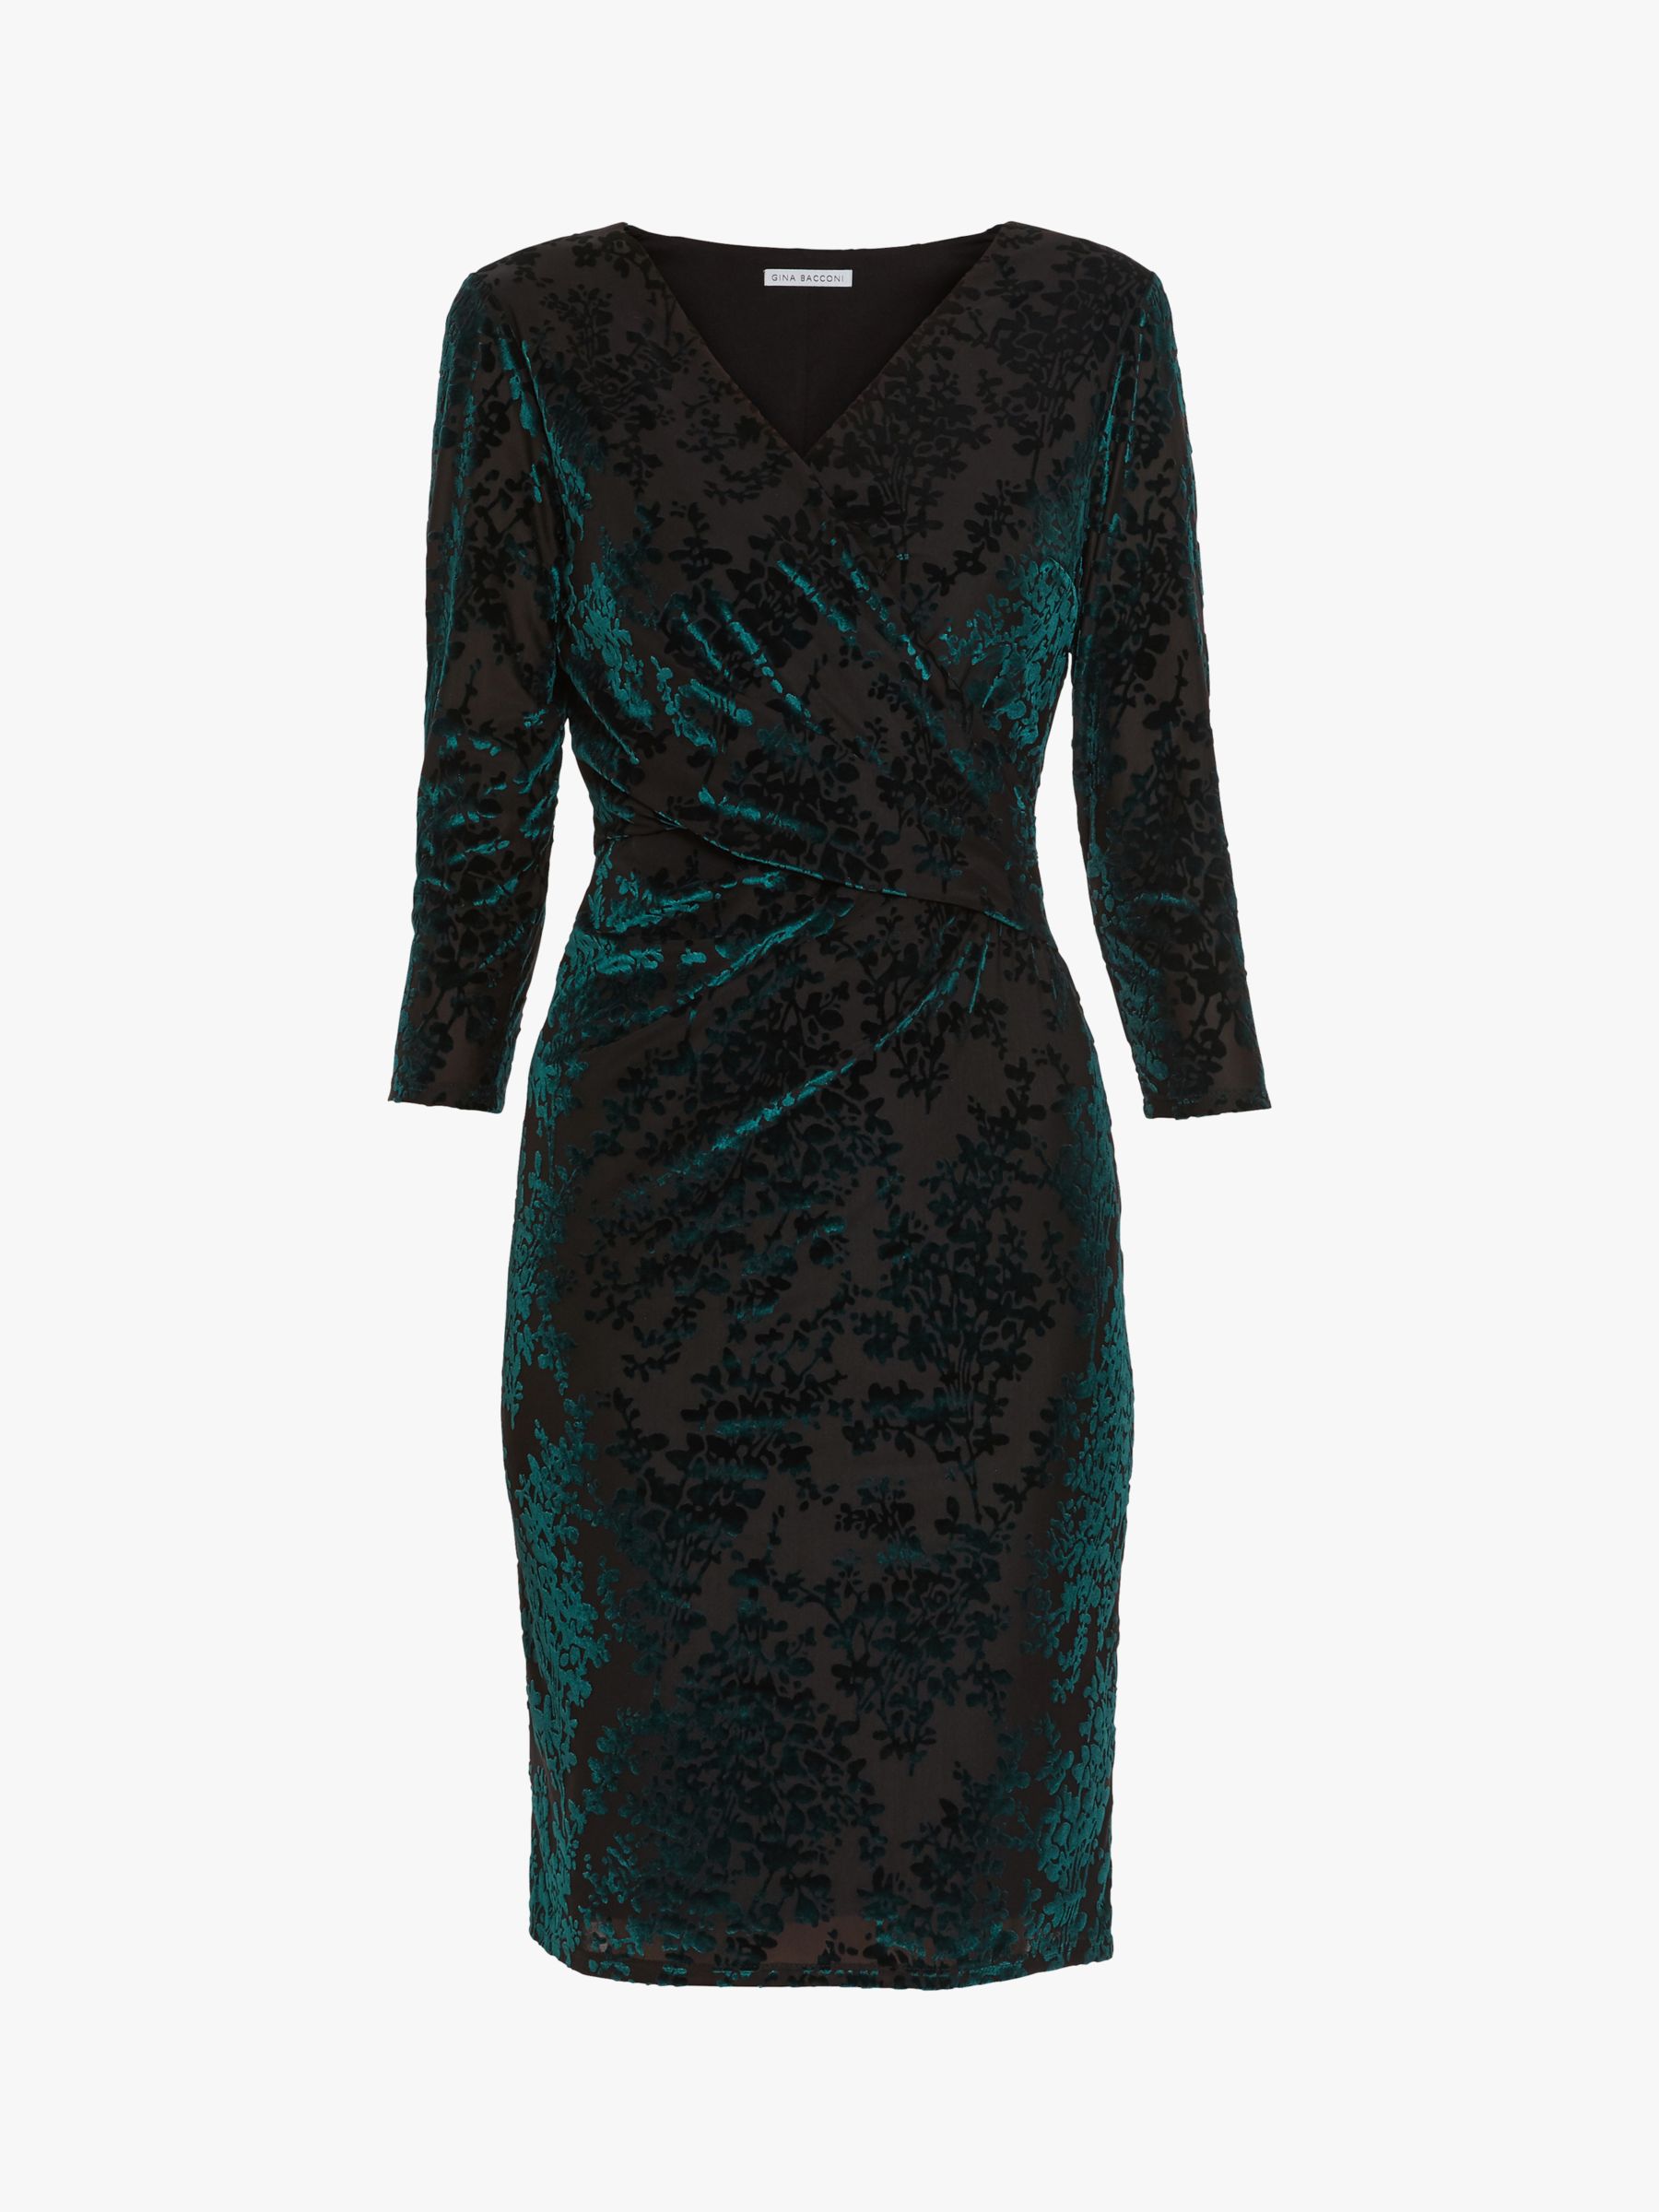 Gina Bacconi Liara Velvet Dress, Emerald at John Lewis & Partners